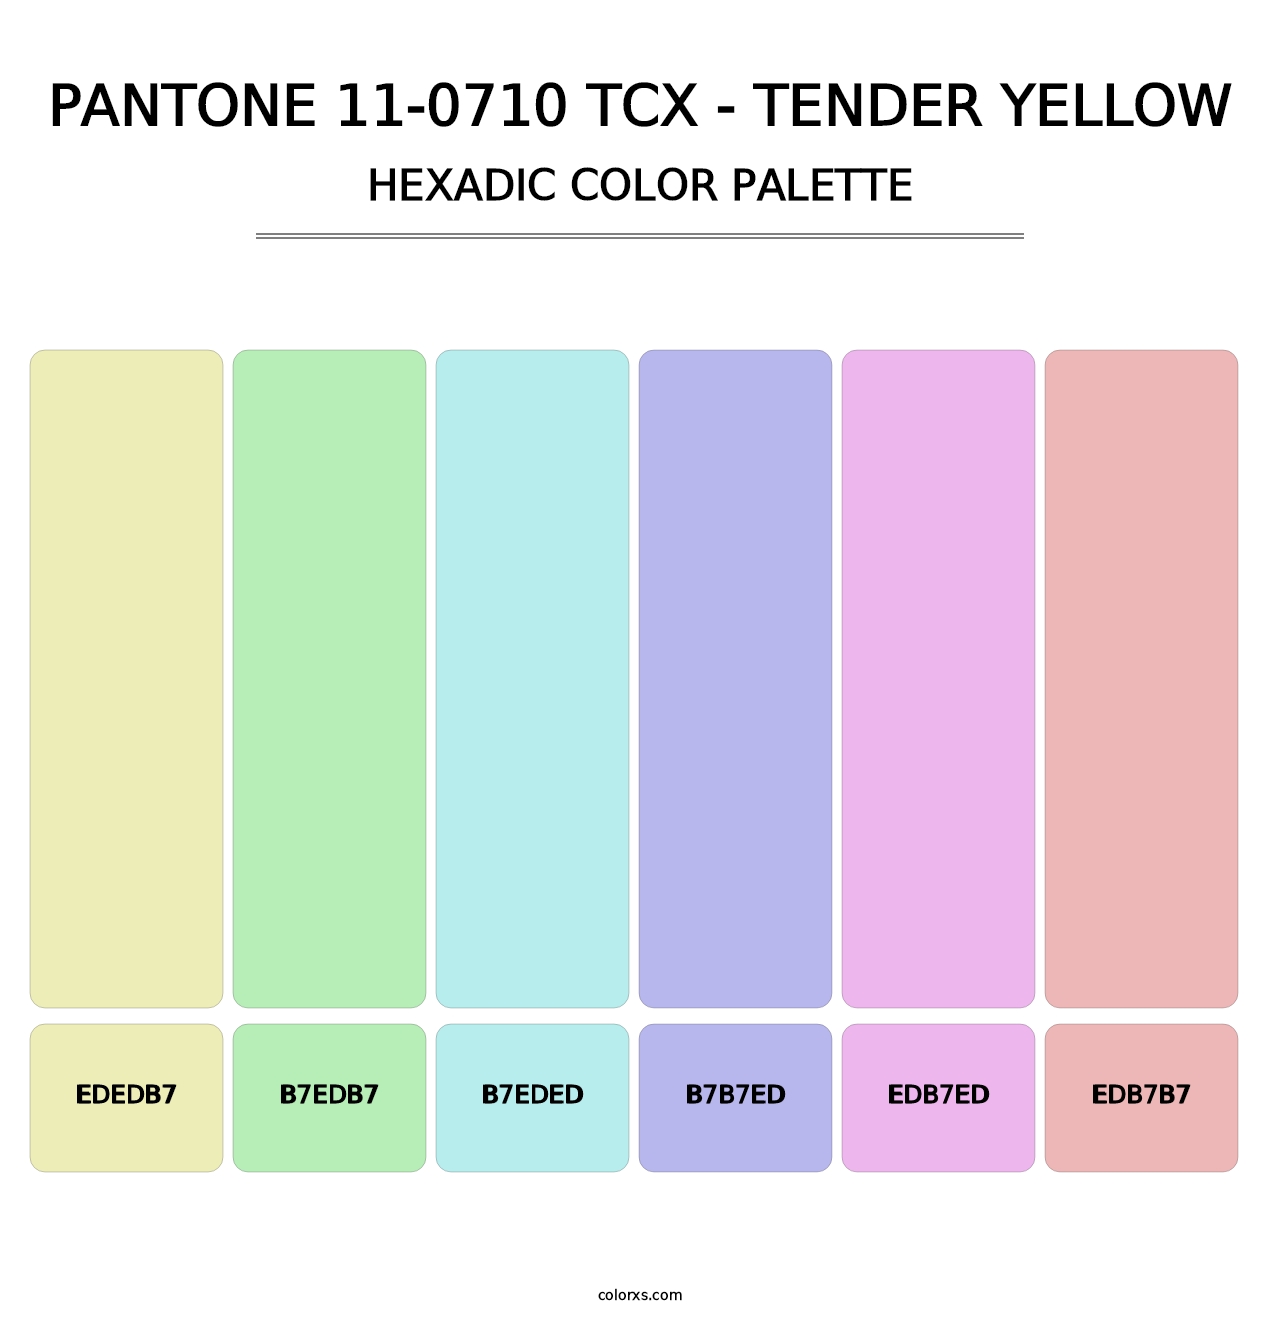 PANTONE 11-0710 TCX - Tender Yellow - Hexadic Color Palette